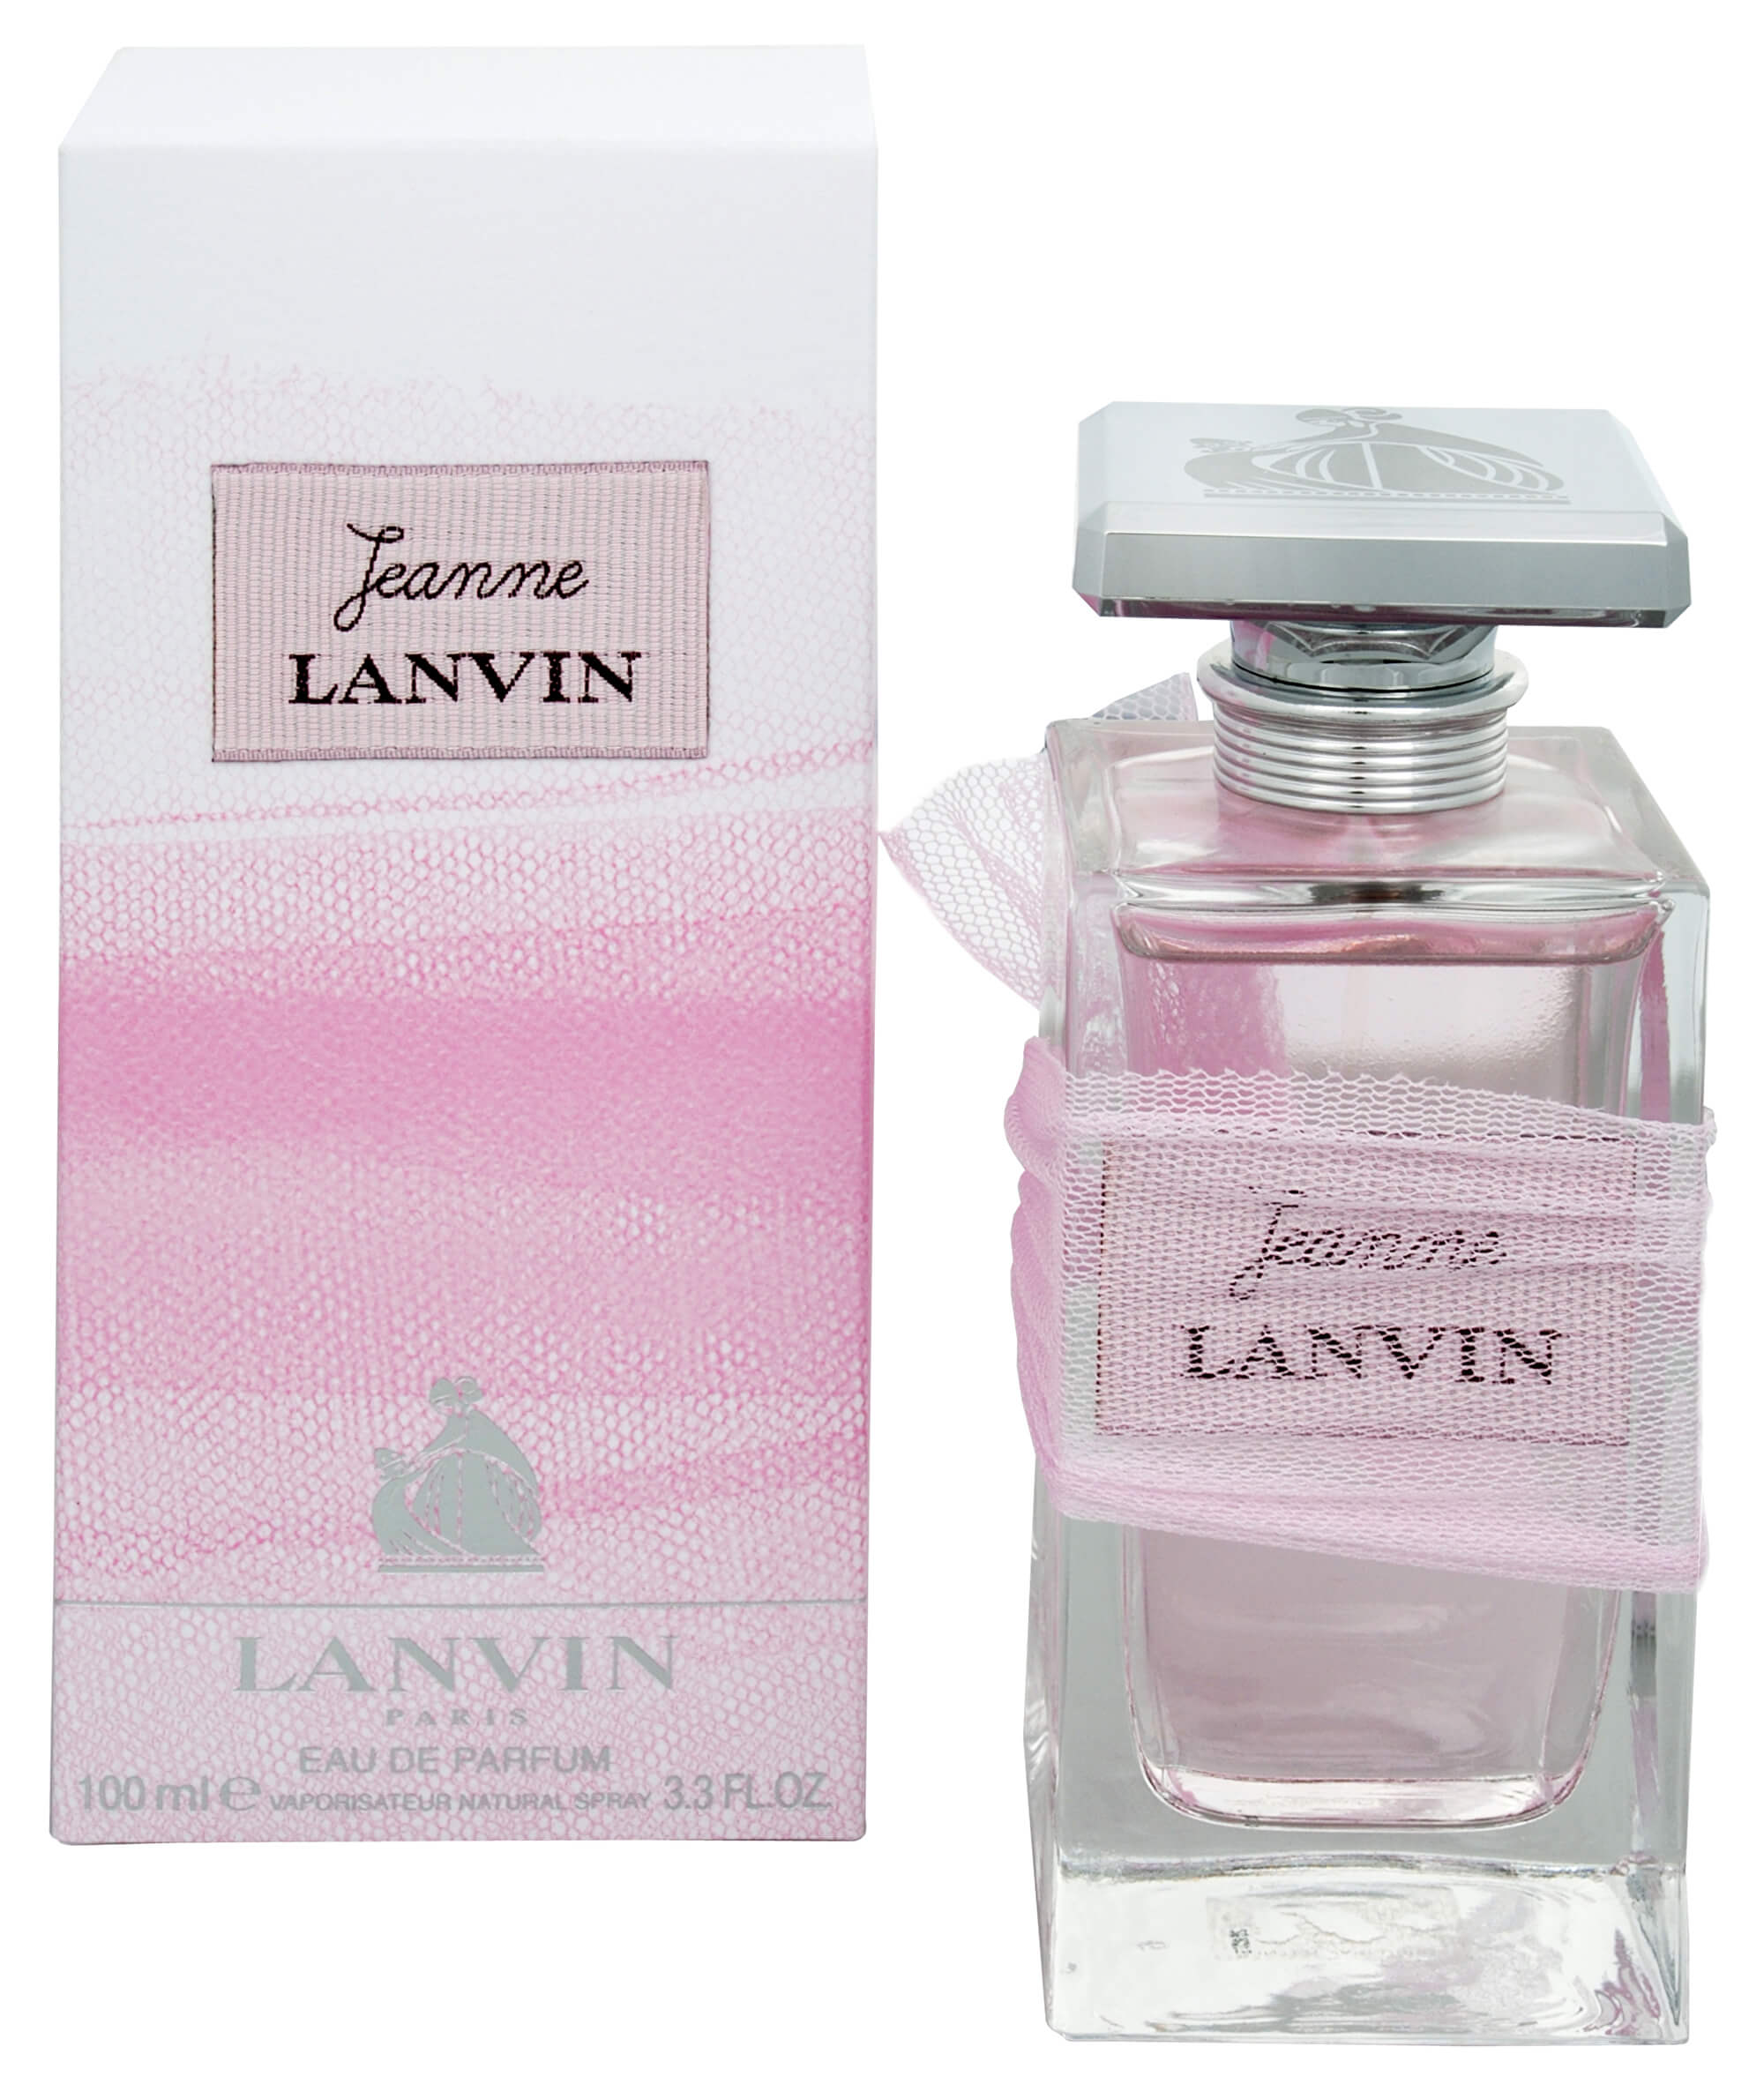 Lanvin Jeanne Lanvin - EDP 1 ml - odstřik